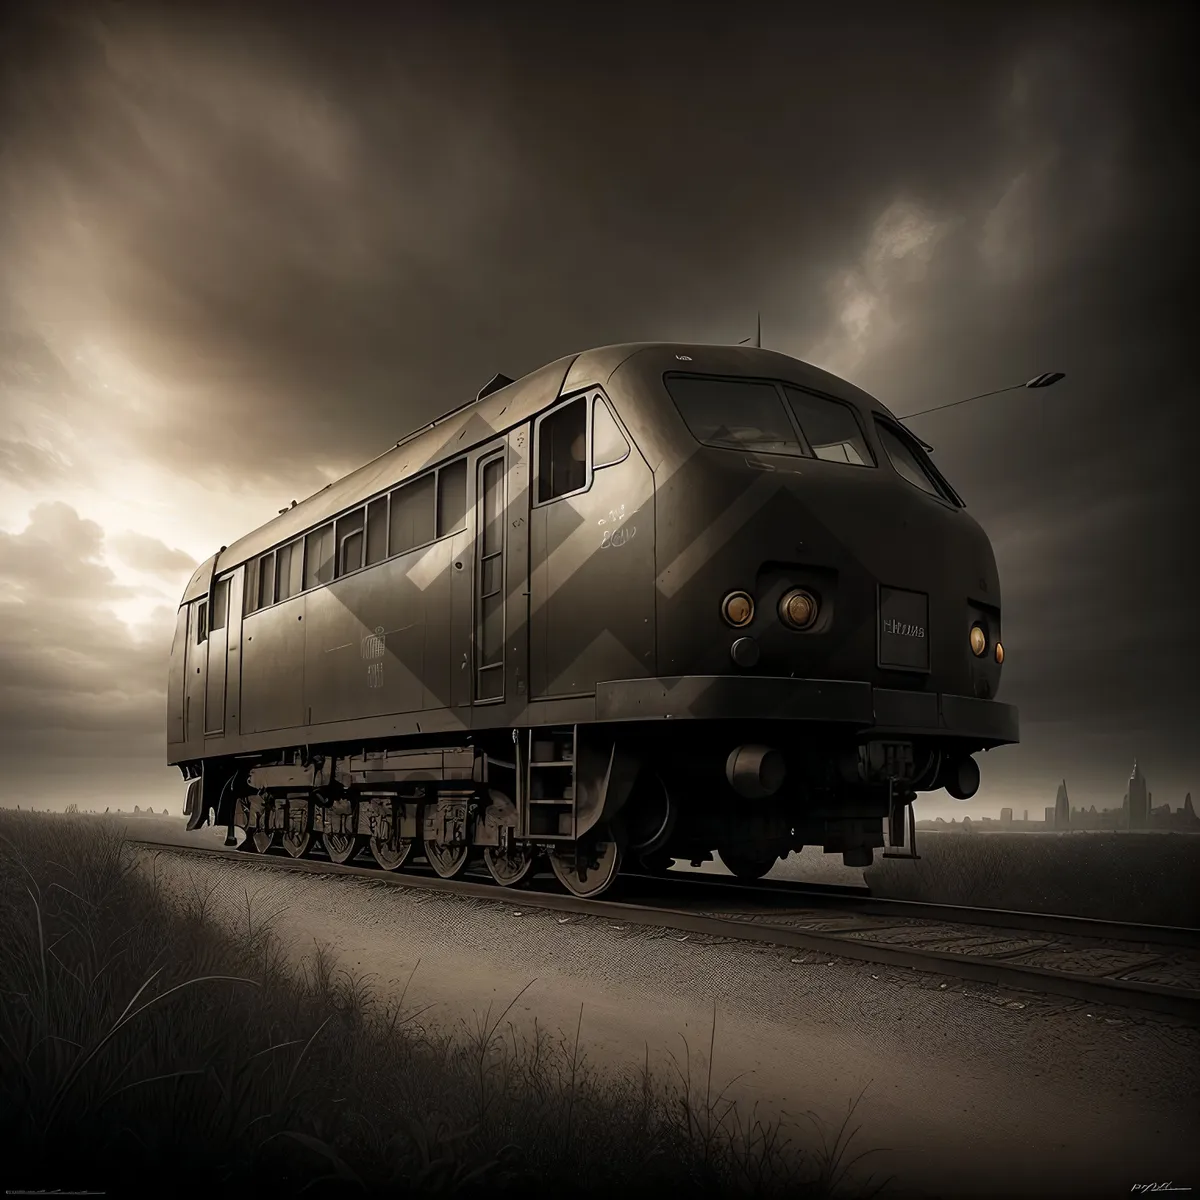 Picture of Speedy Passenger Train on Railway Tracks